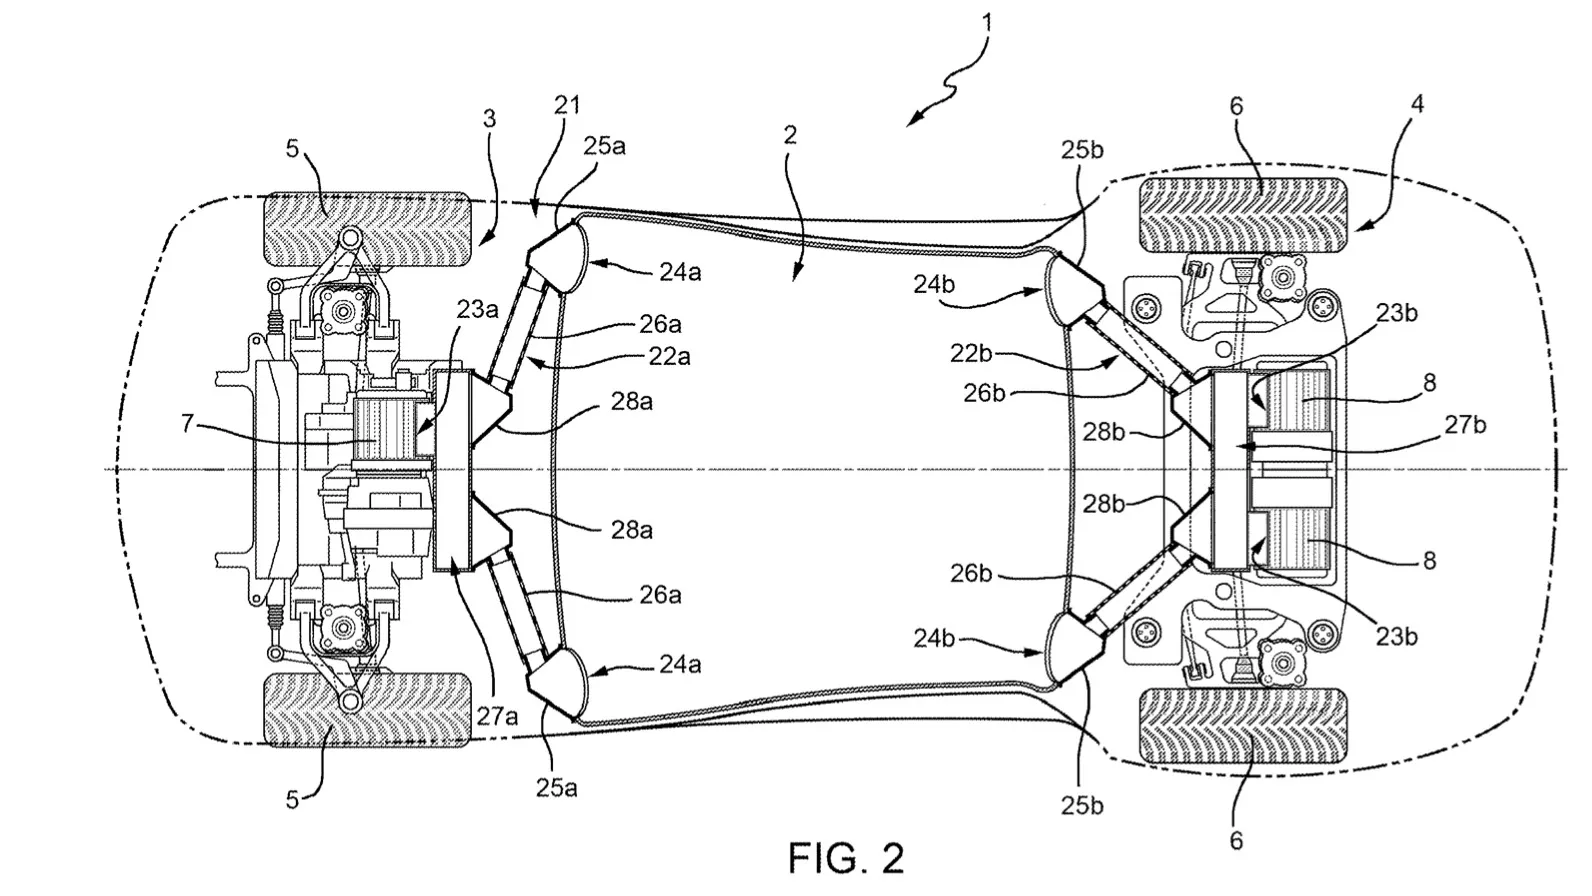 Ferrari patents 3-motor electric car with sound generators